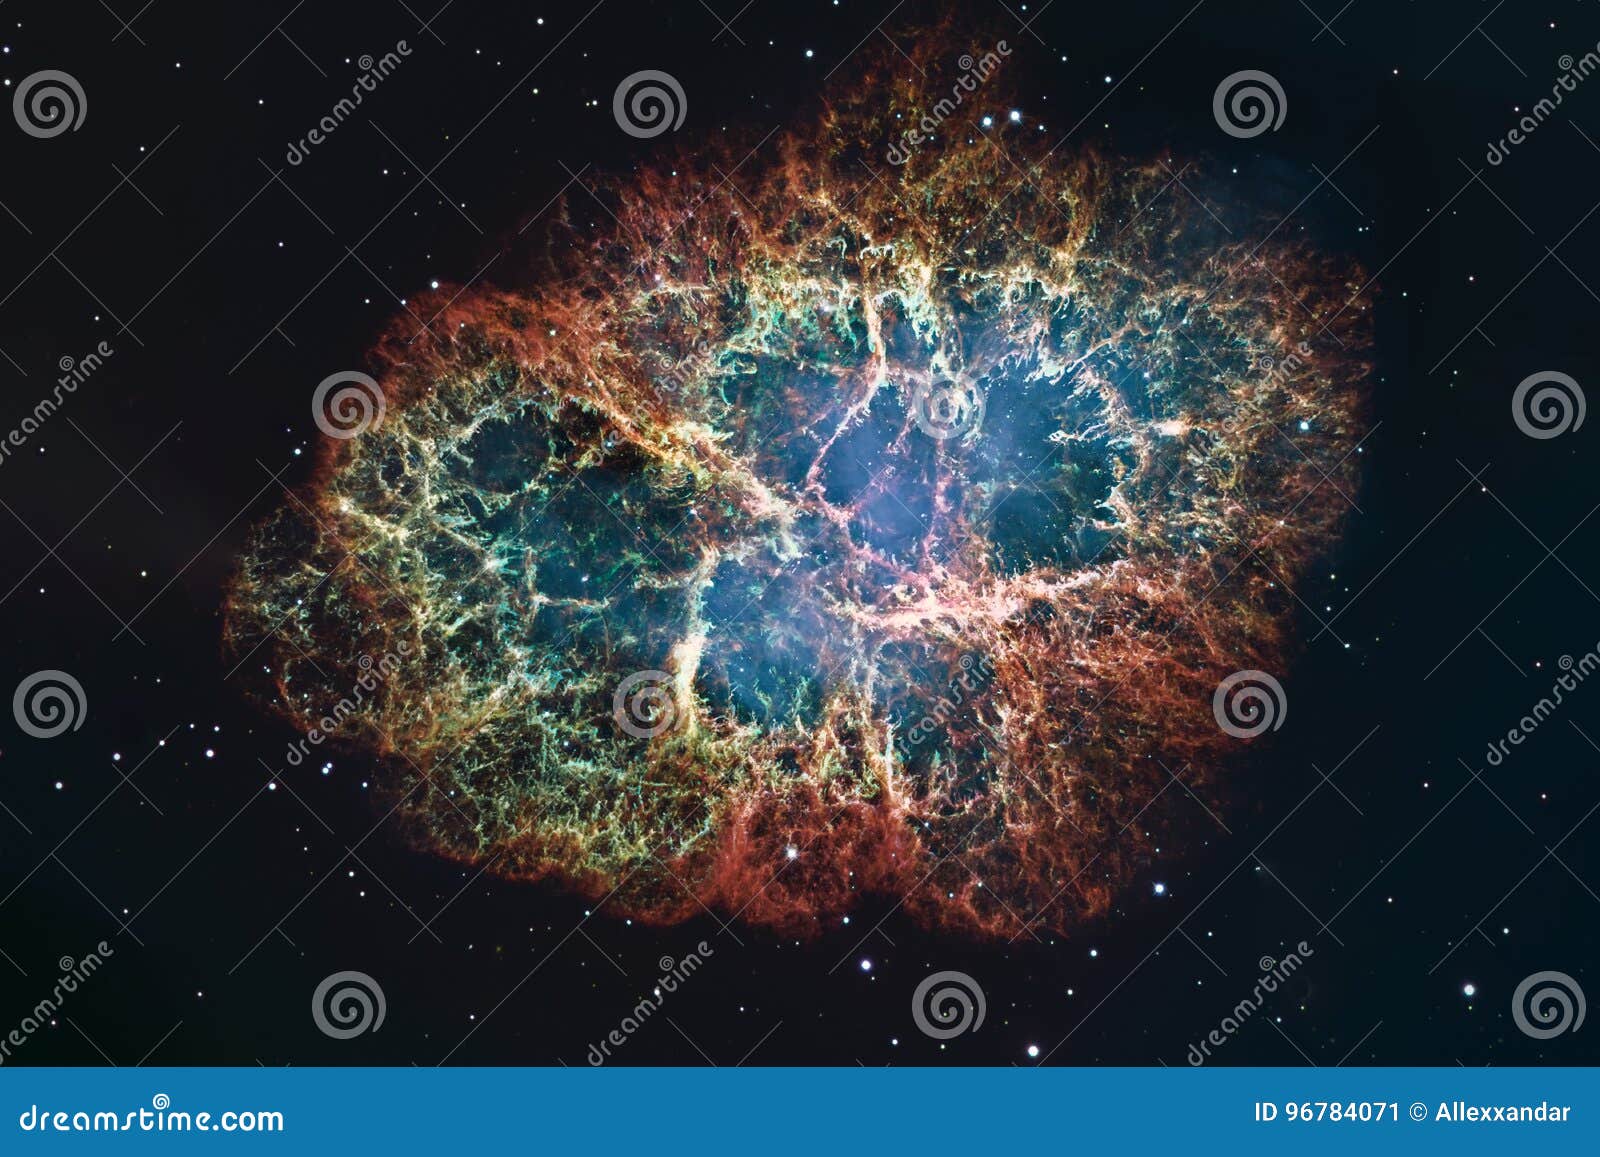 crab nebula in constellation taurus. supernova core pulsar neutron star.